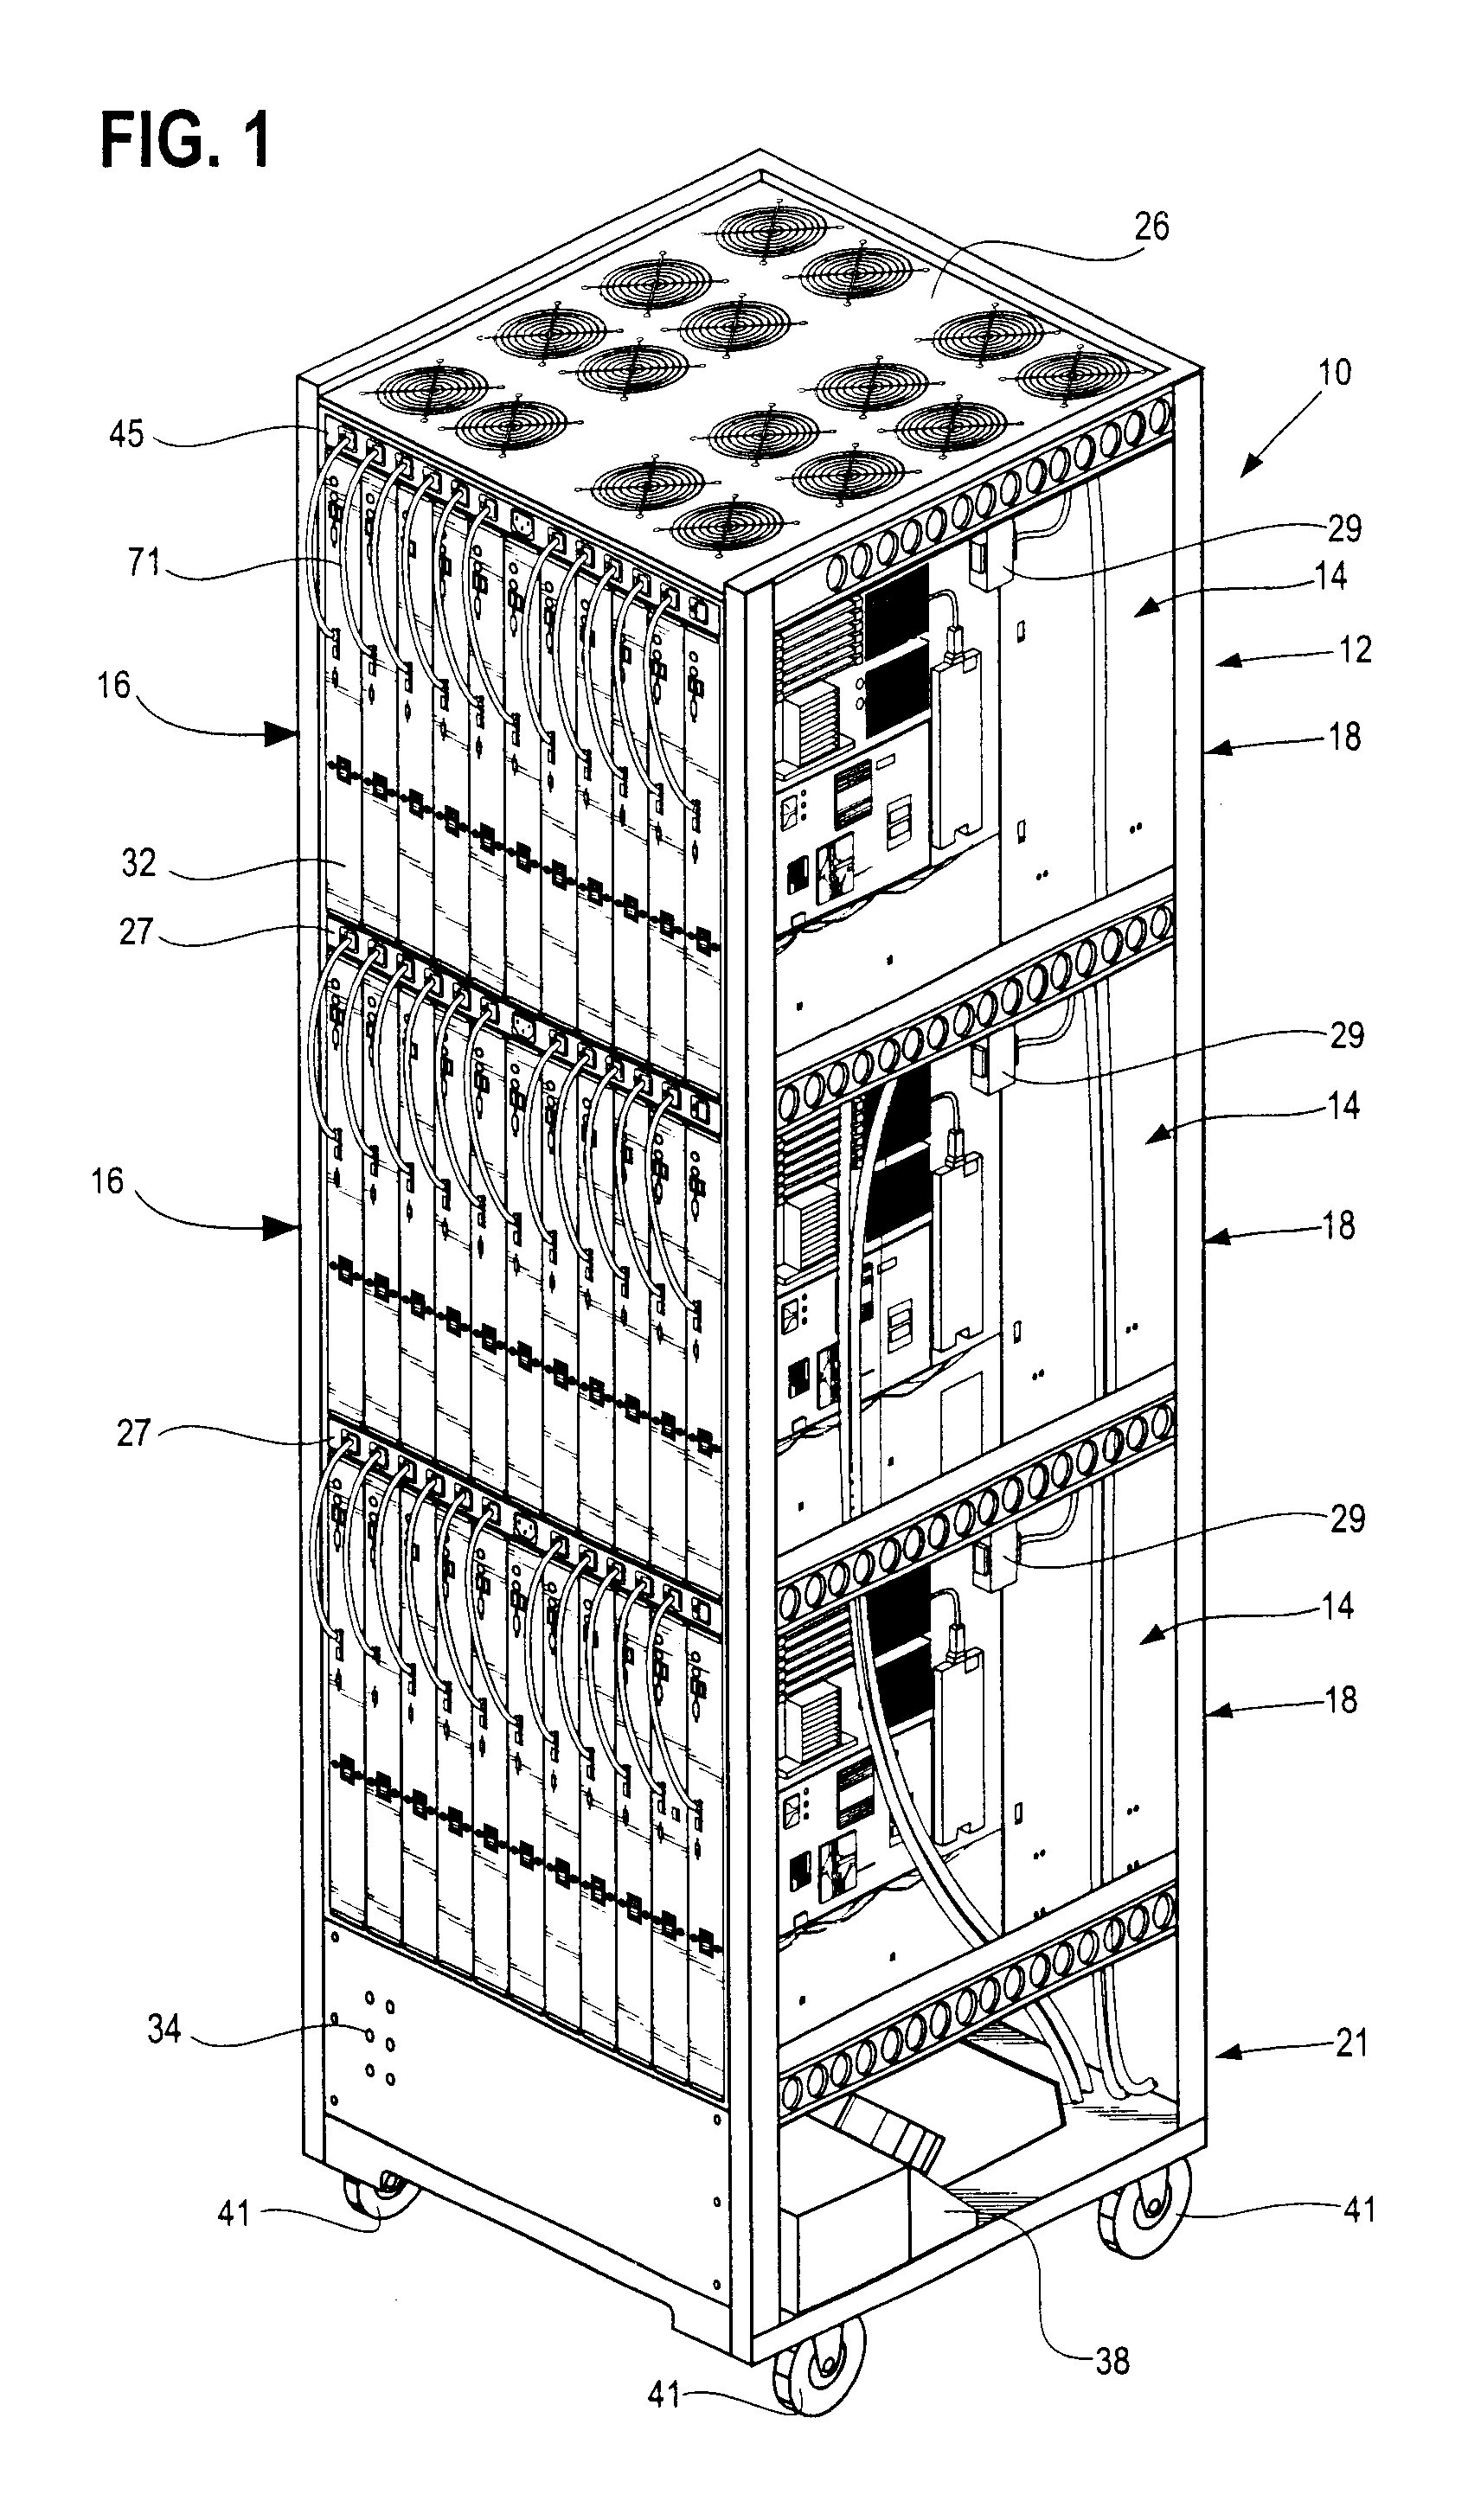 Rack mountable computer component fan cooling arrangement and method